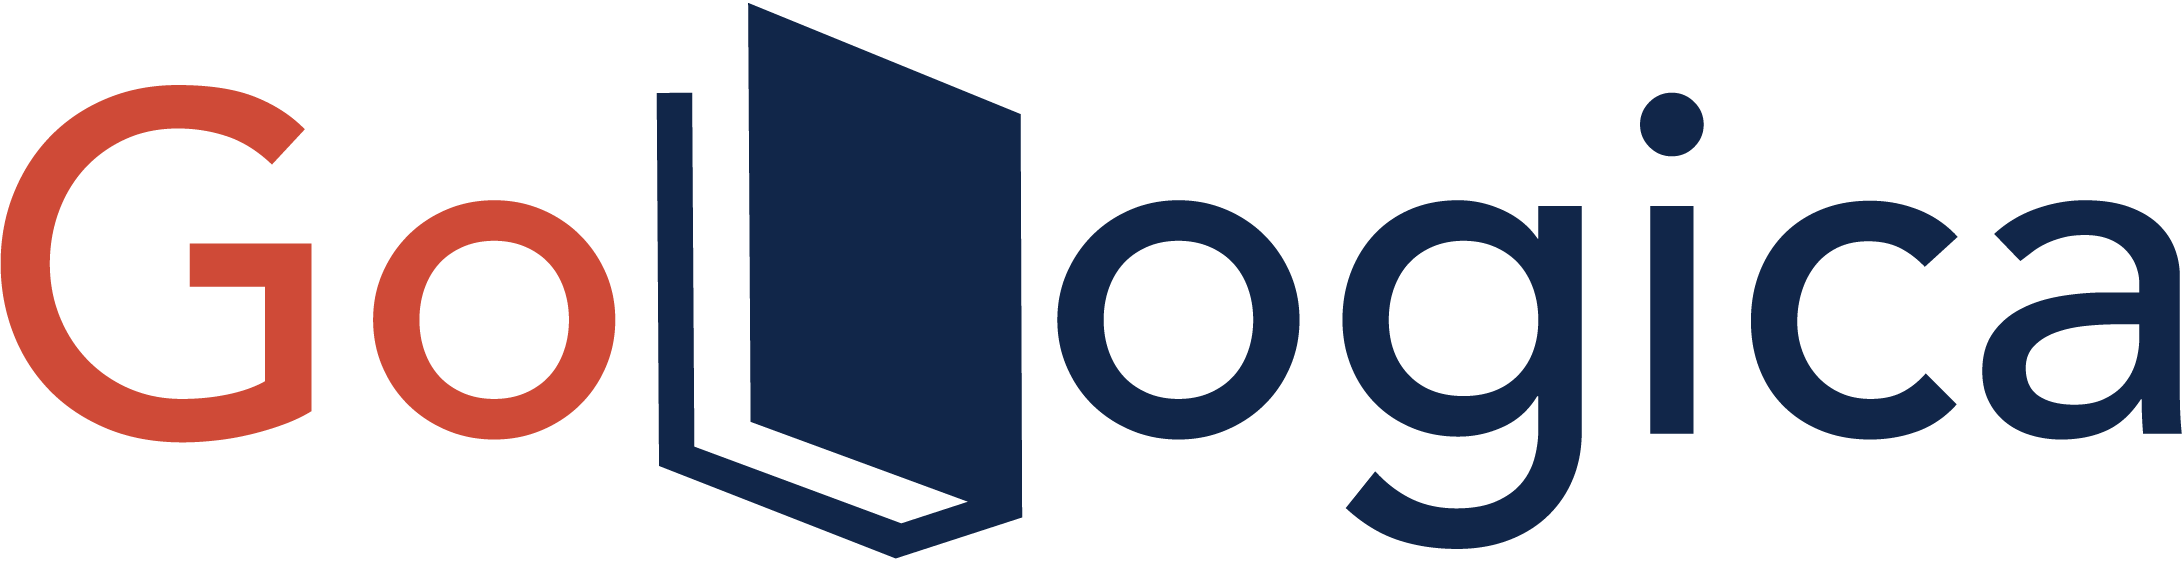 Gologica_logo 1